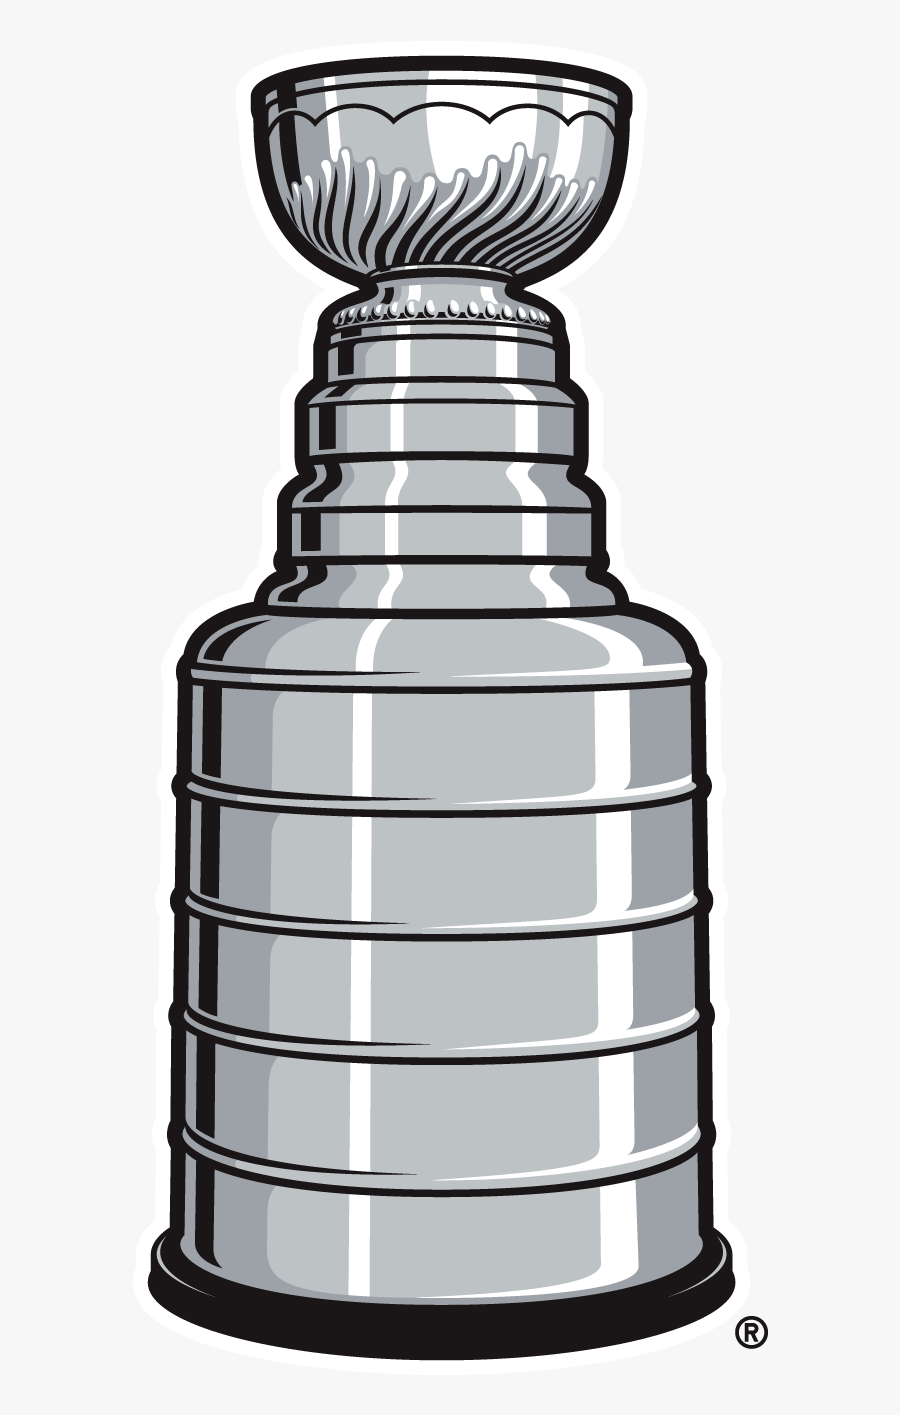 Stanley Cup Finals 2019 Logo, Transparent Clipart